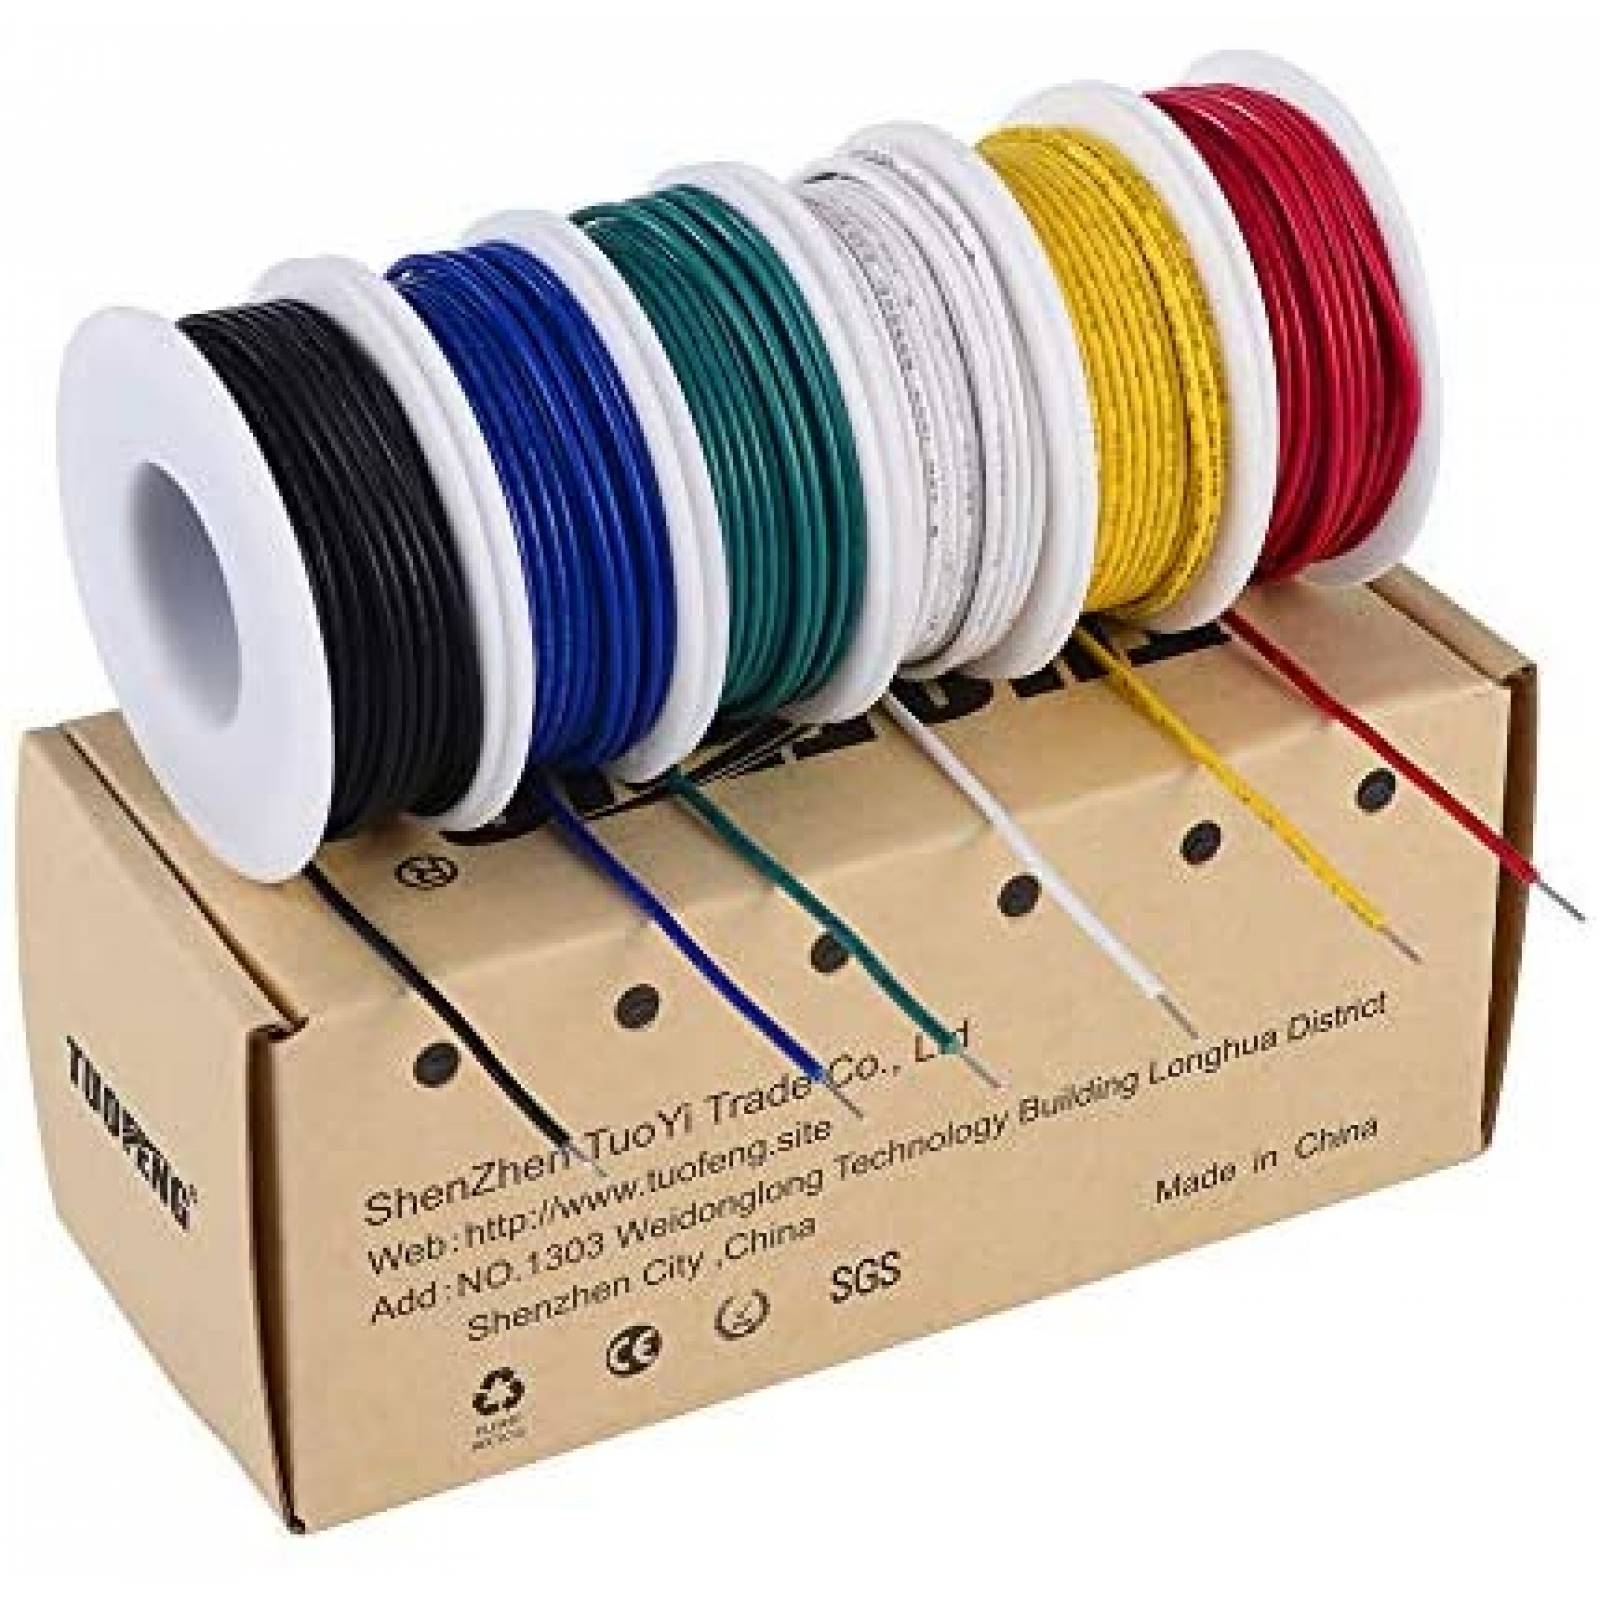 Caja con 6 Cables TUOFENG 6 Colores Diferentes 13 Pies